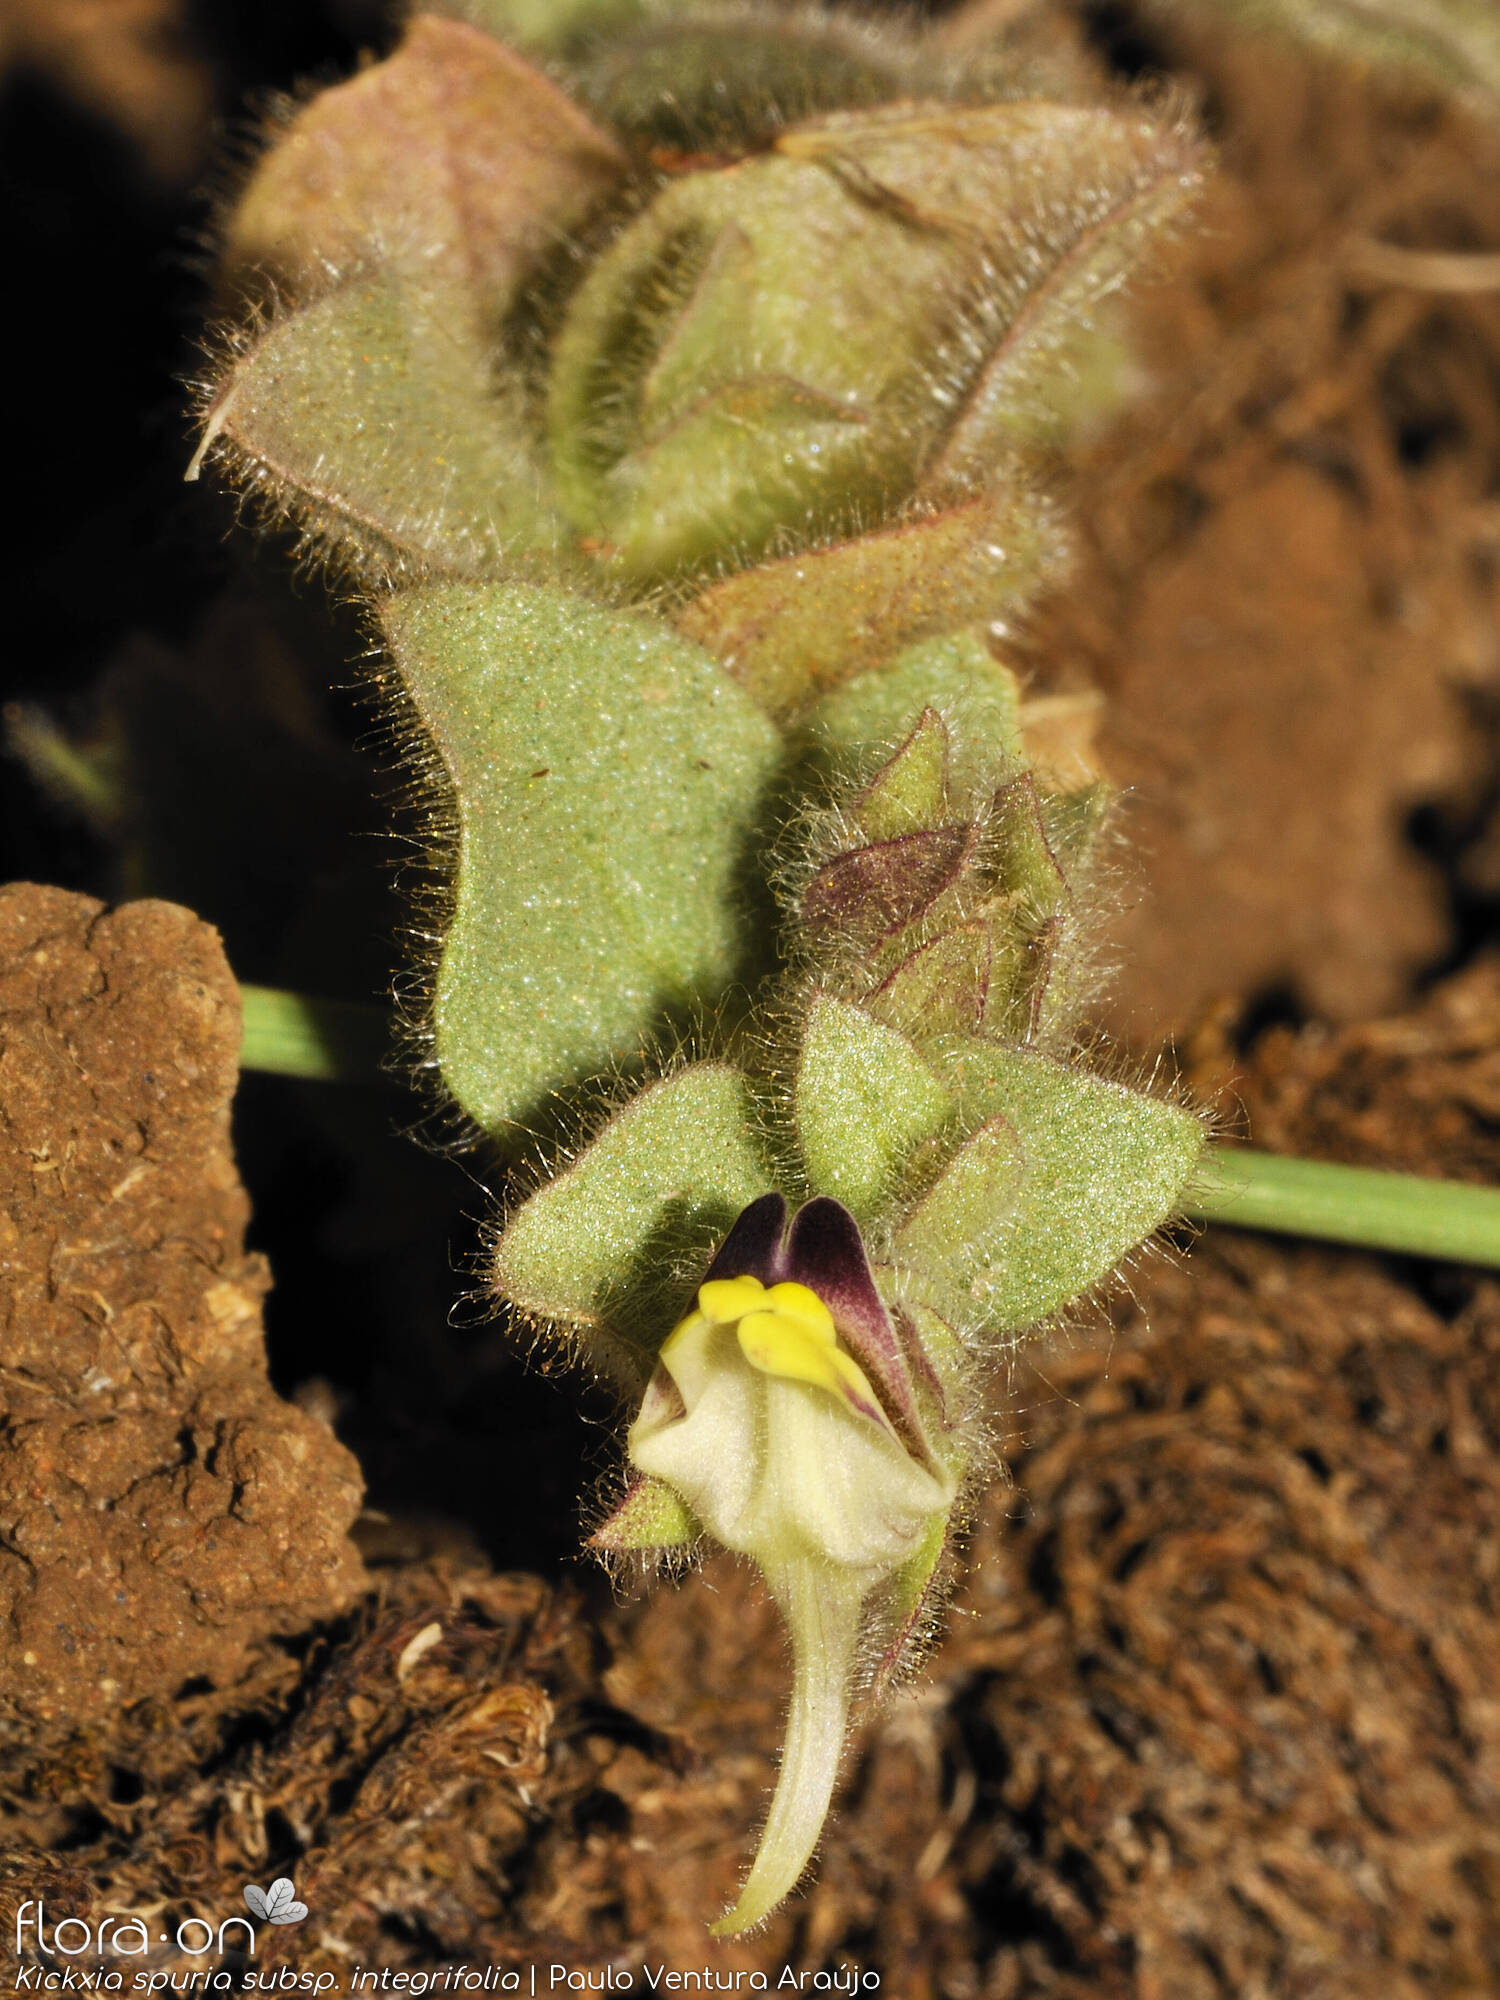 Kickxia spuria integrifolia - Flor (geral) | Paulo Ventura Araújo; CC BY-NC 4.0